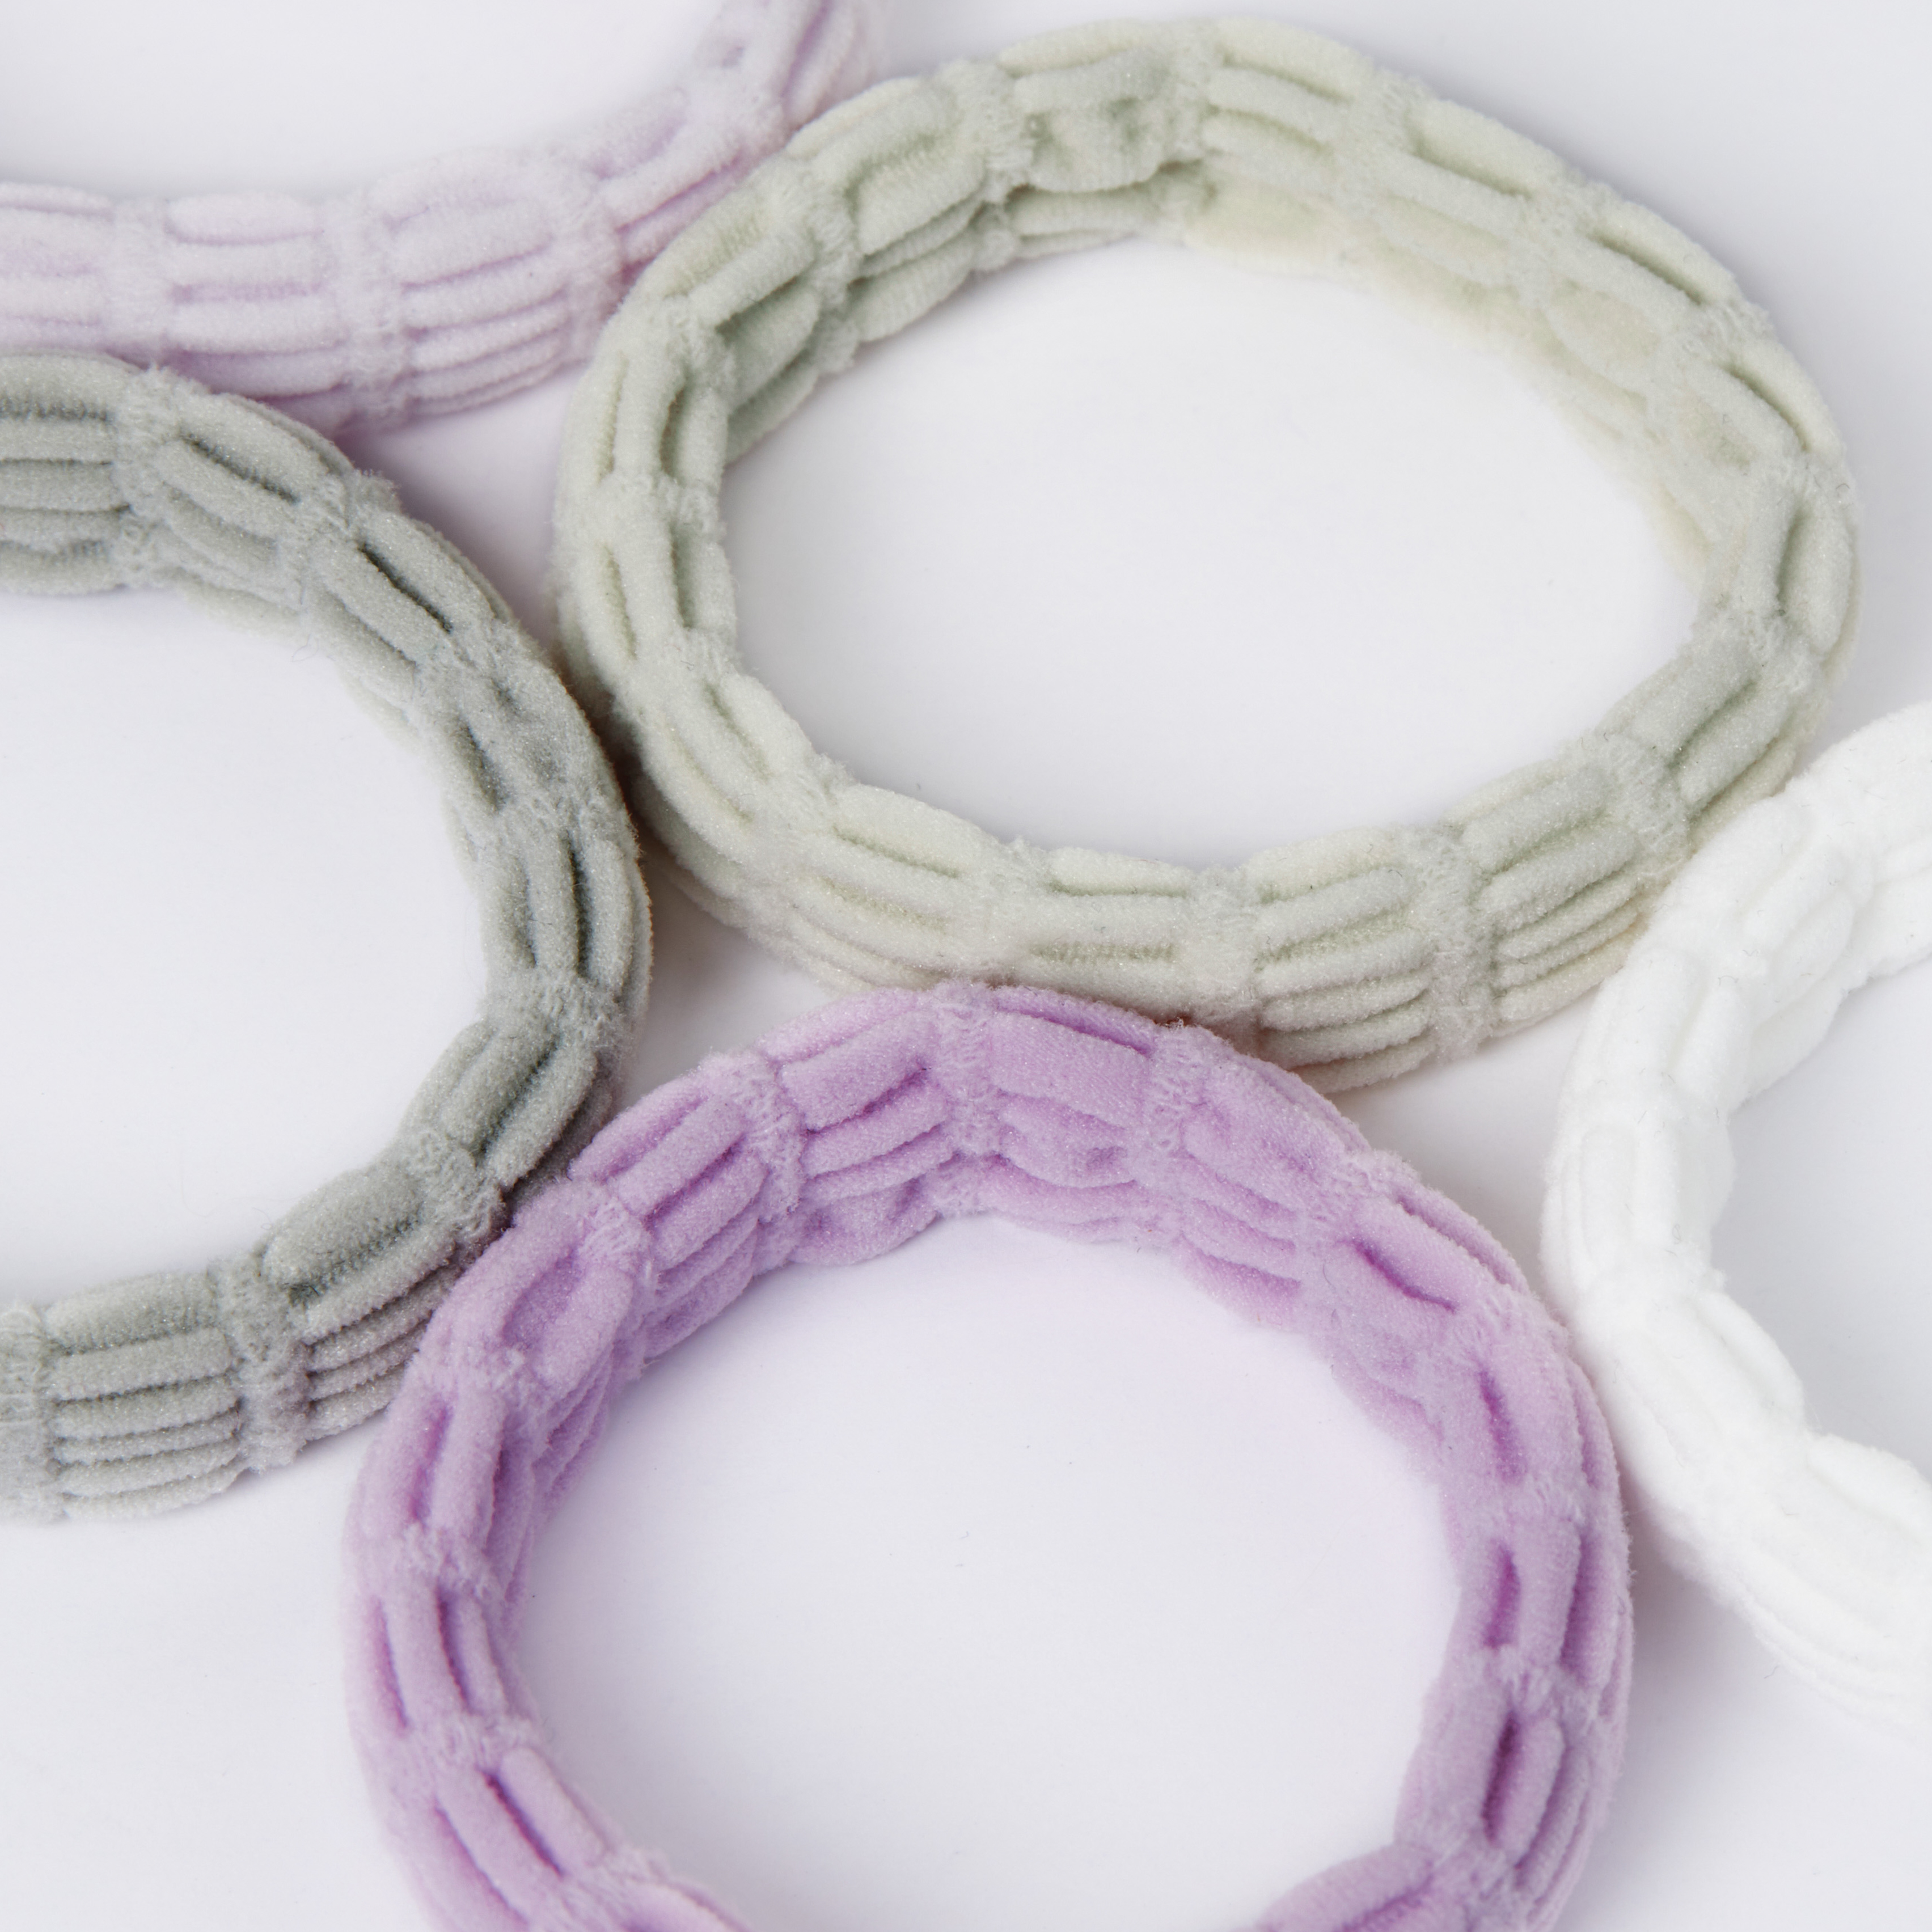 Hairitage Mesh Hair Scrunchies - Multi (White, Ivory, Gray, Lavender, Purple) - image 4 of 6